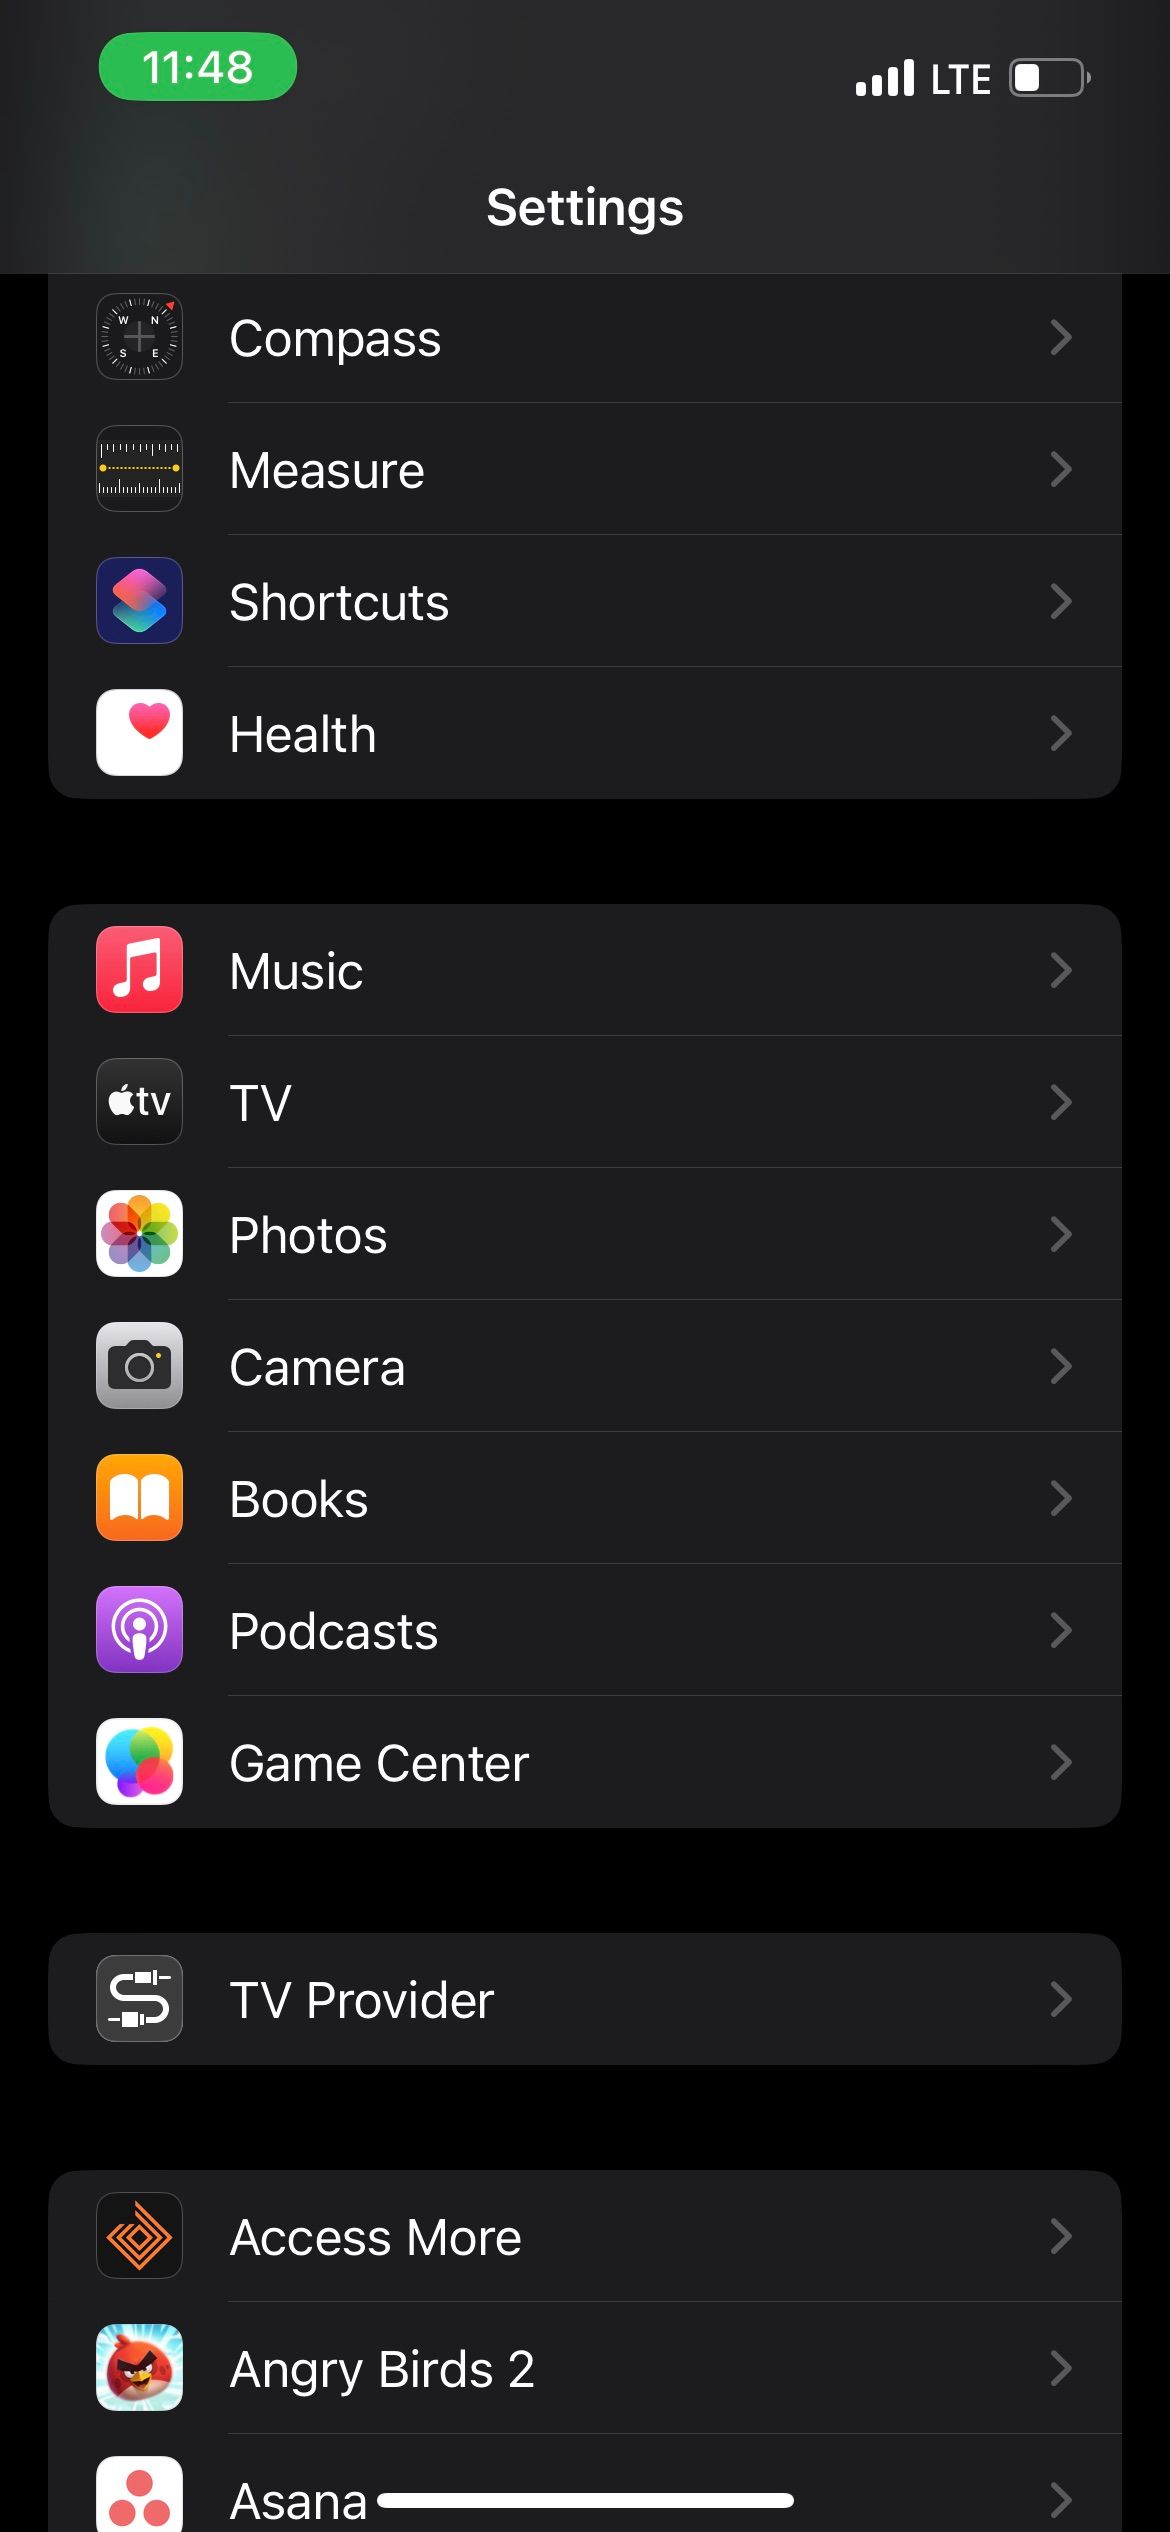 Settings menu on iOS 